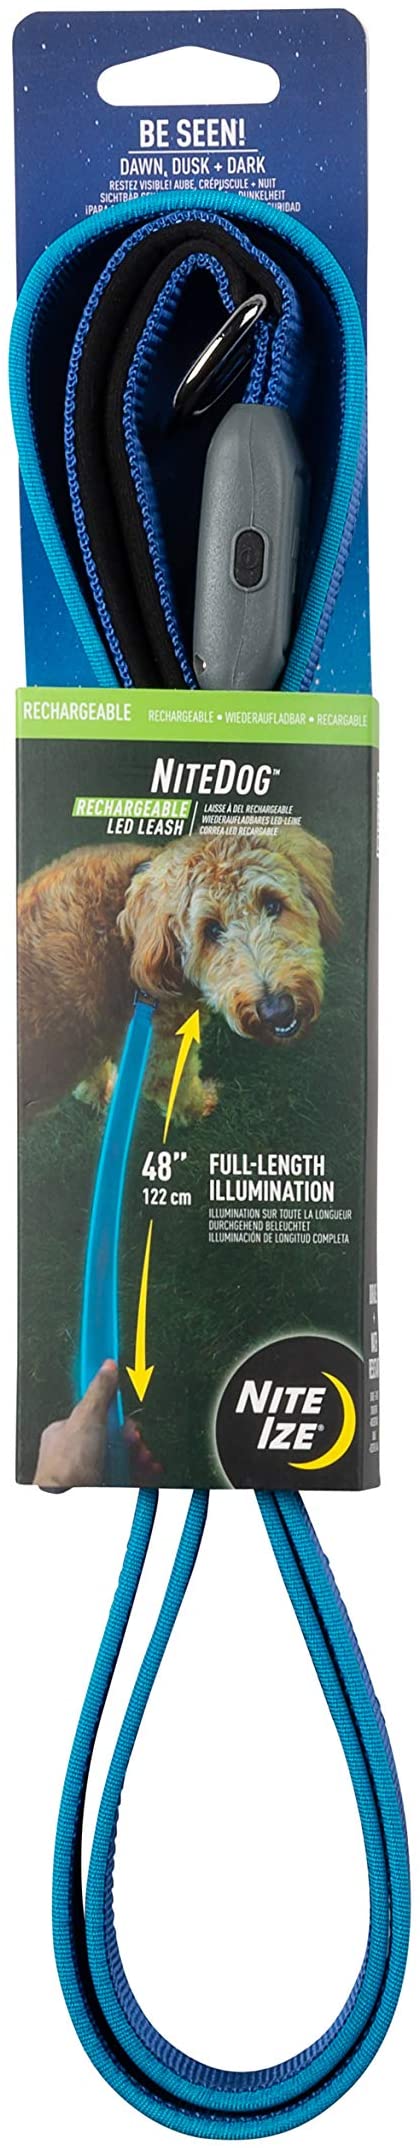 Nite Ize NiteDog Rechargeable LED Leash, USB Rechargeable 5 Foot Light Up Dog Leash w/Padded Handle, Blue